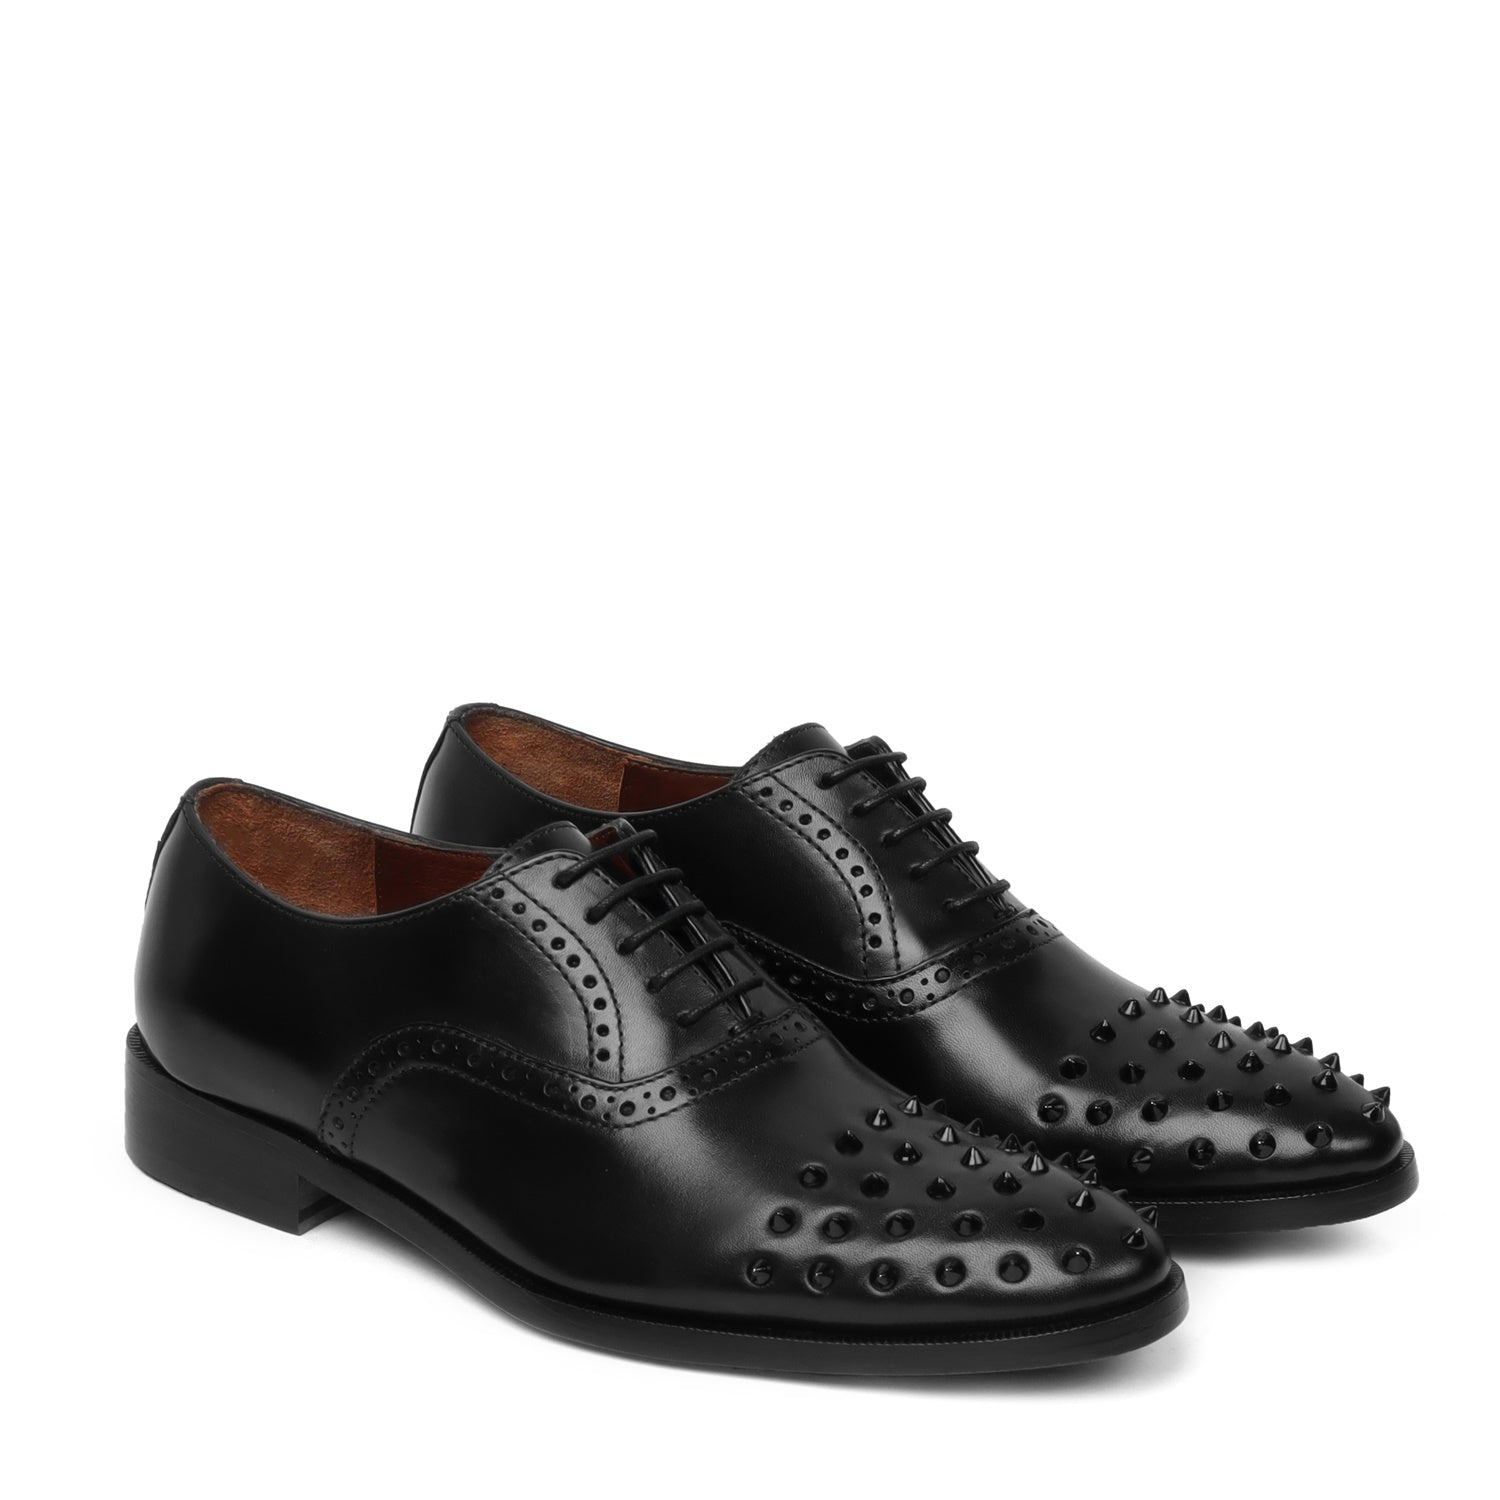 Men's Black Quarter Brogue Oxford Leather Shoes with Studded Toe by Brune & Bareskin